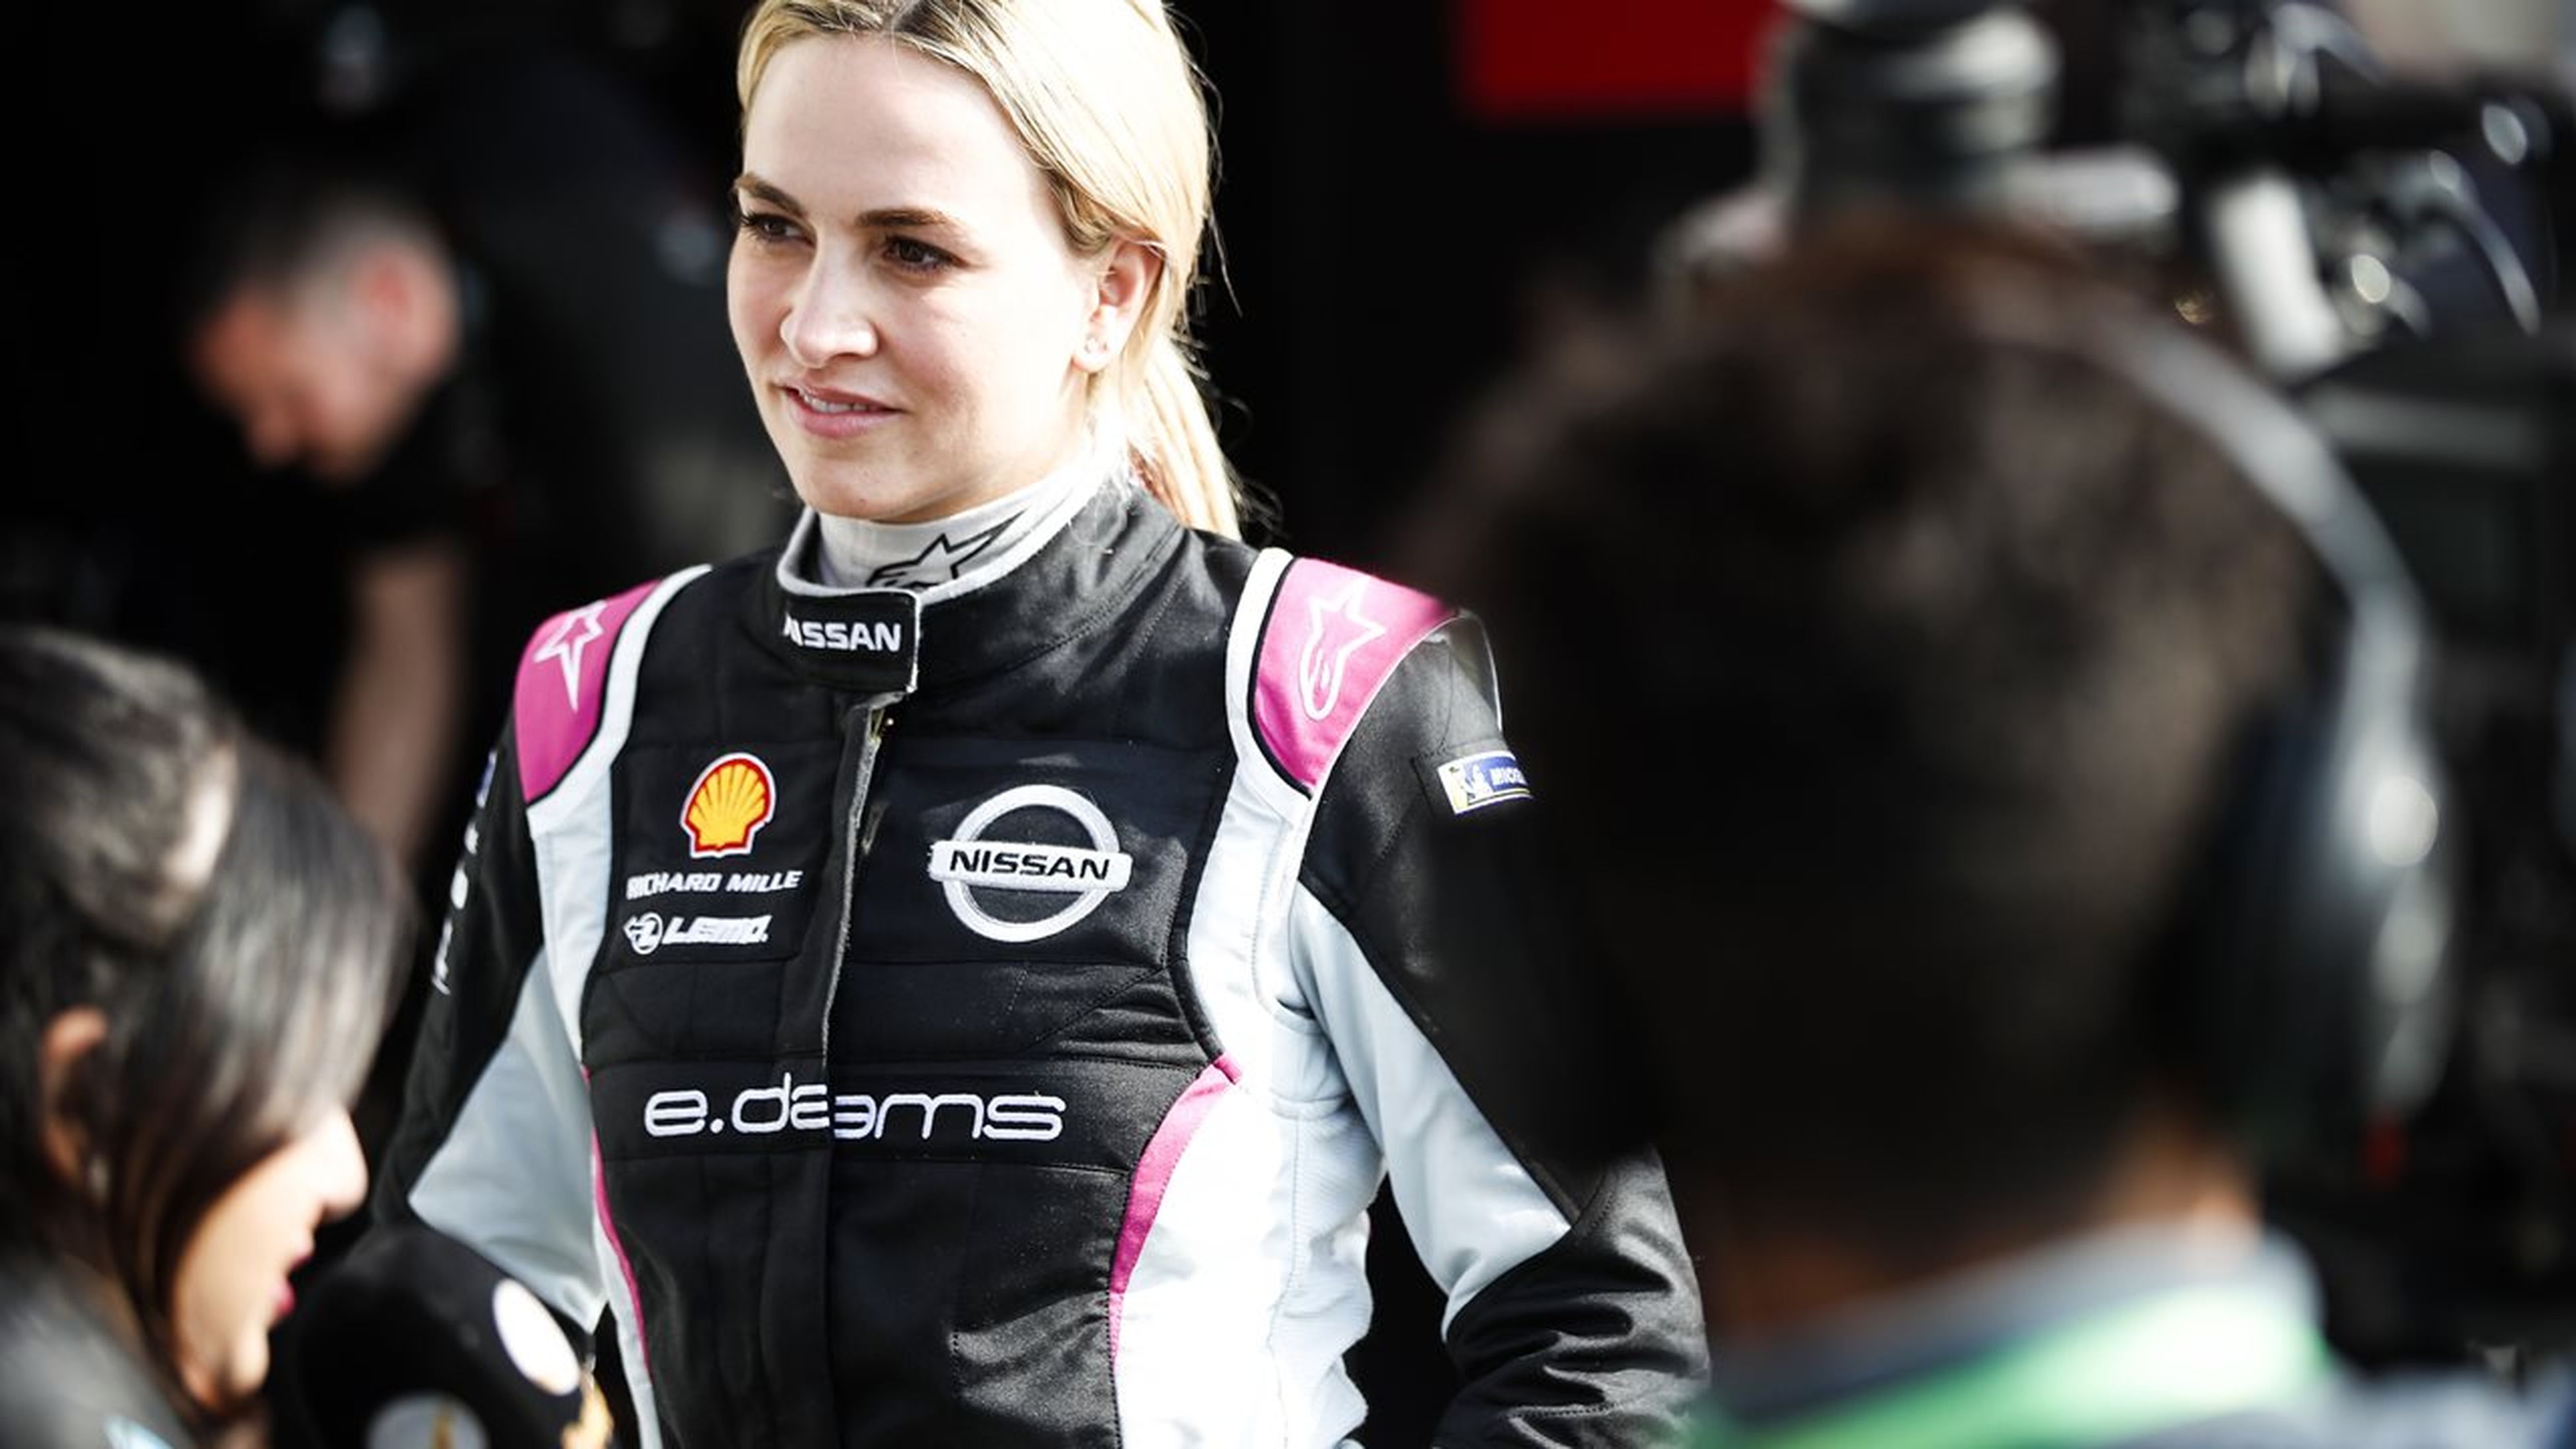 Test mujeres piloto Fórmula E